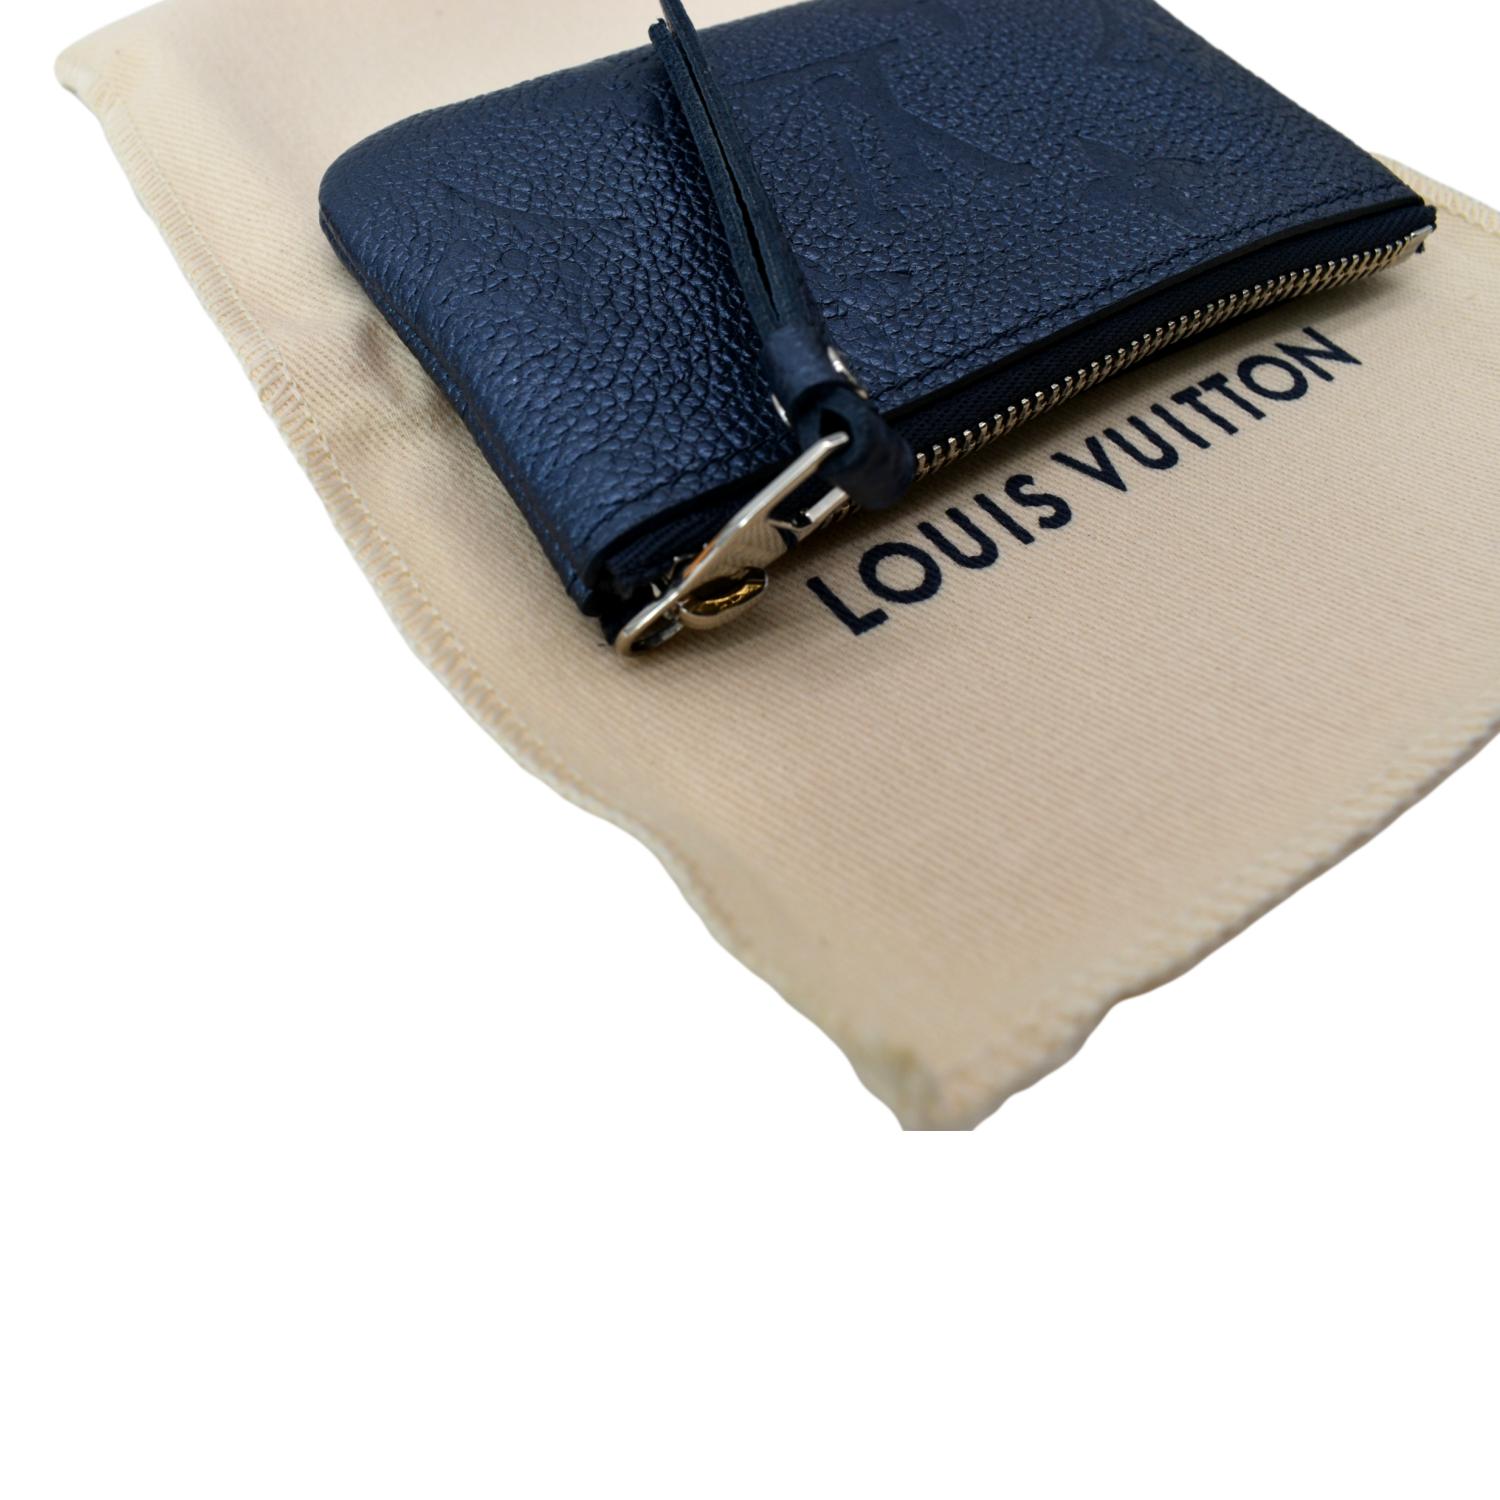 Louis Vuitton Men's Key Pouch Small Bag